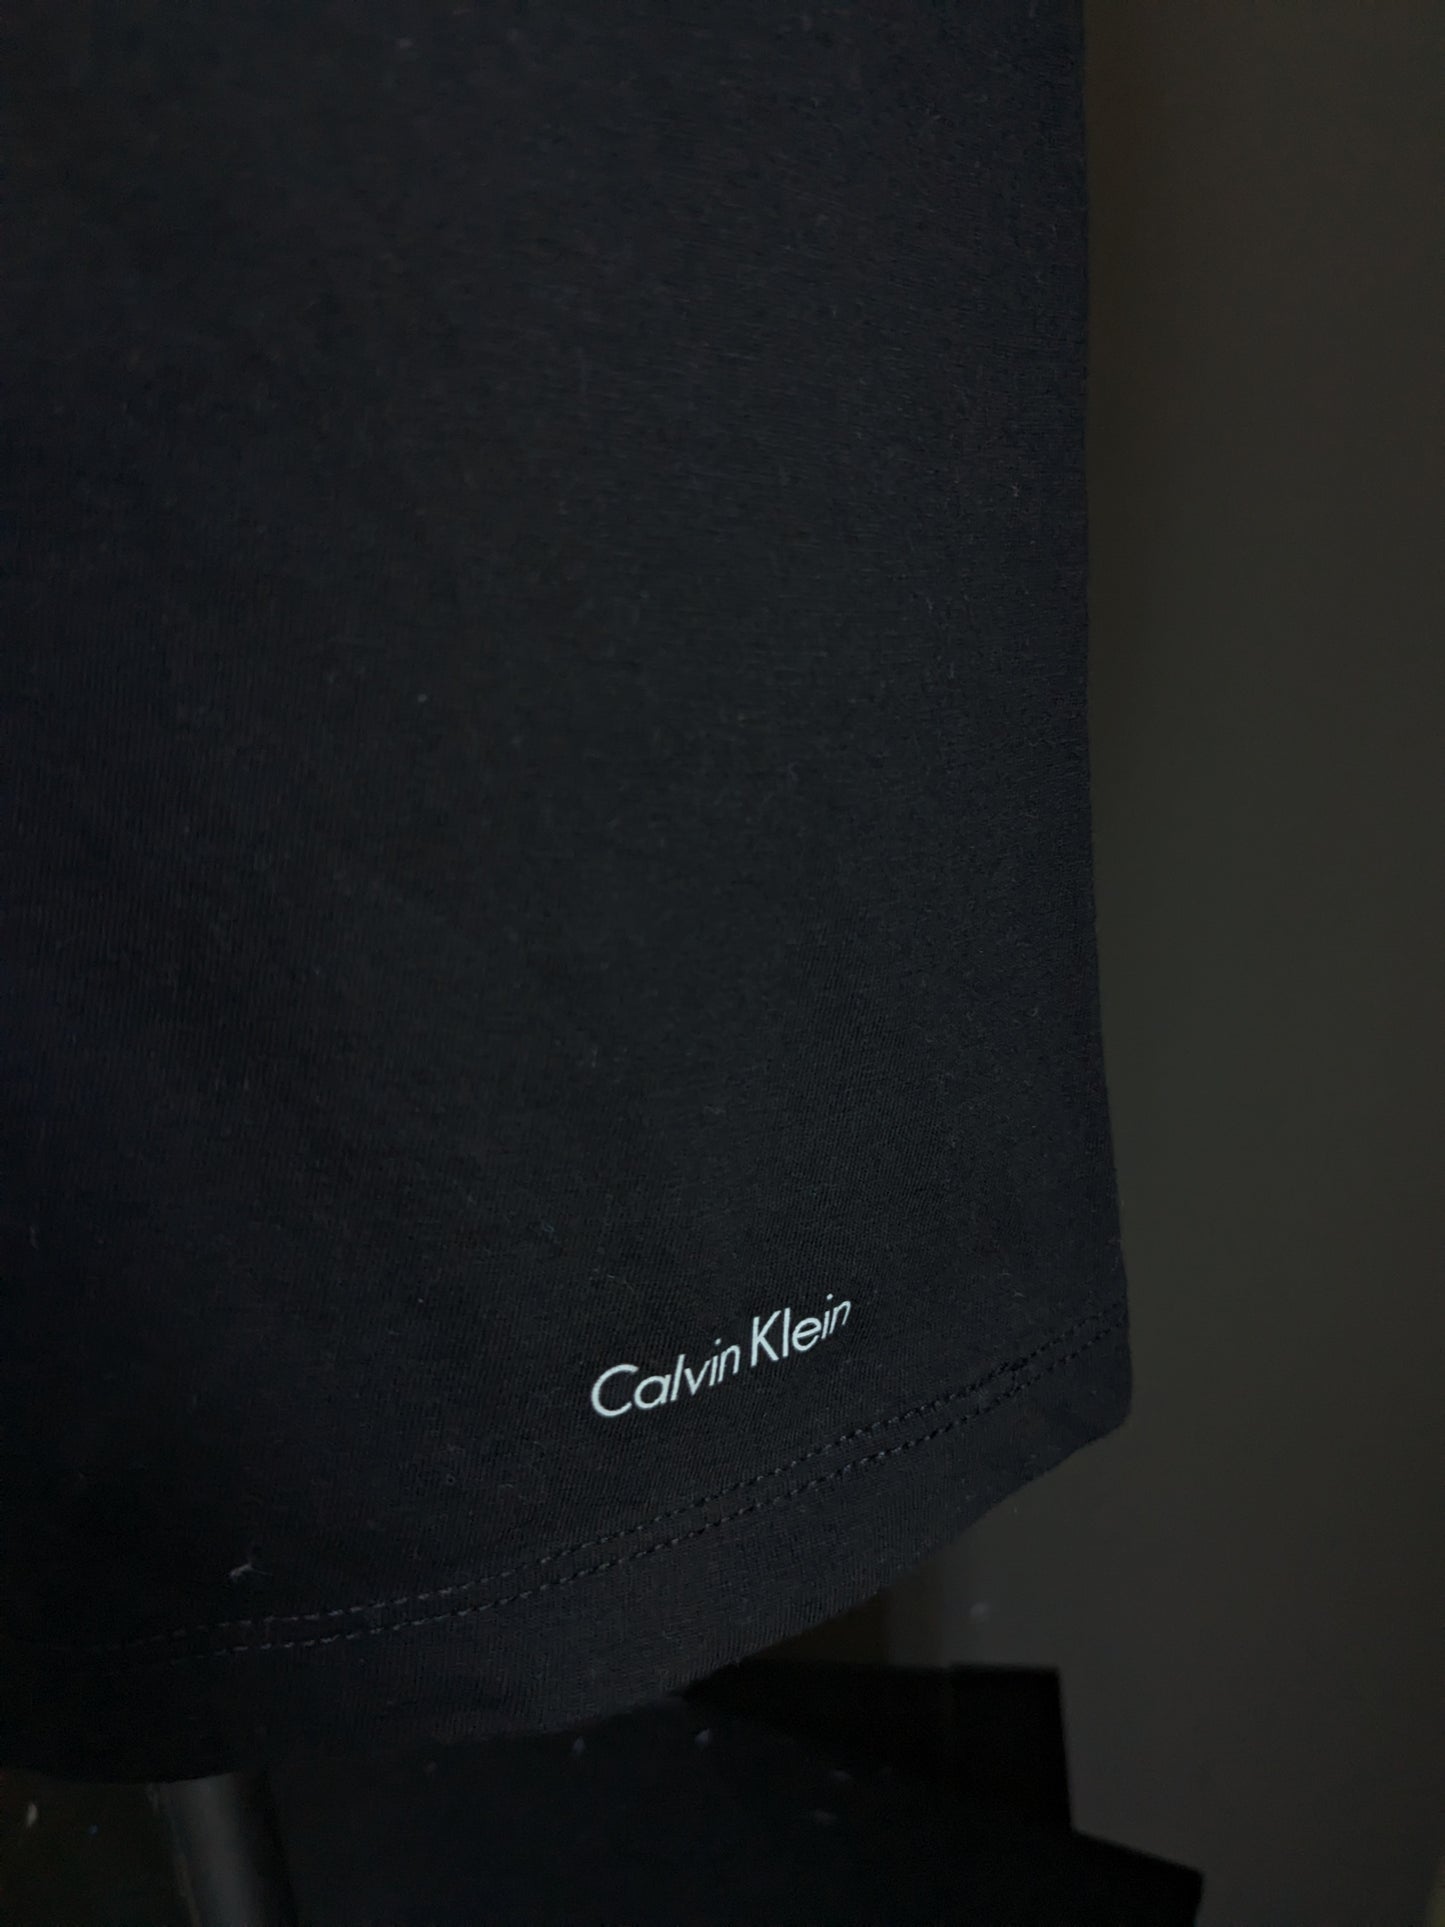 Calvin camisa pequeña. Color negro. Talla M.